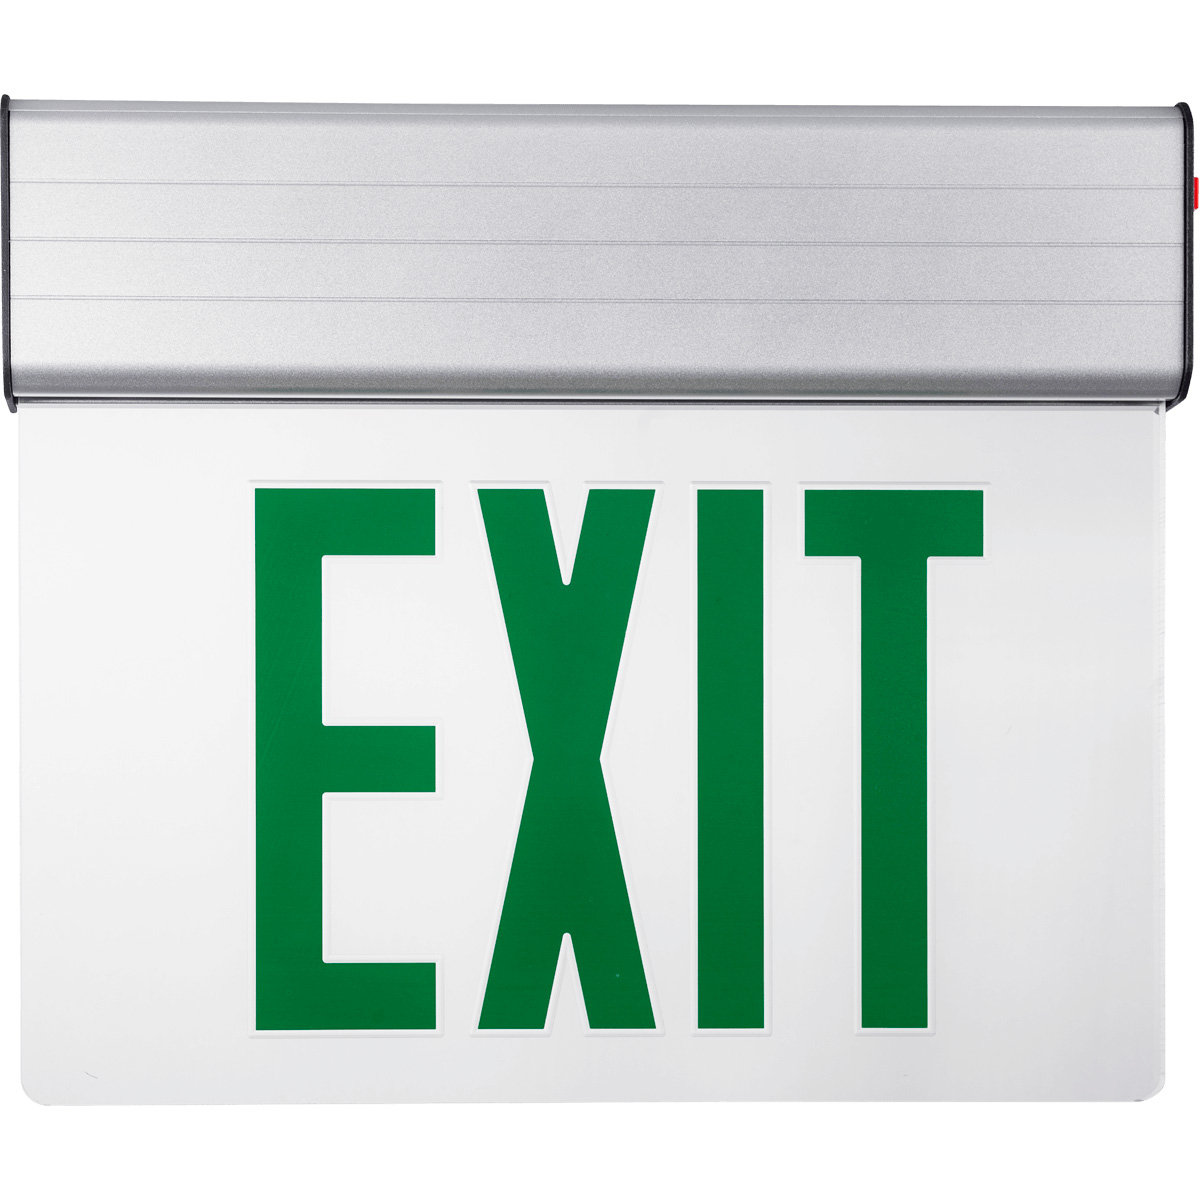 Single Red LED Emergency Exit Light Sign Ceiling Edge Lit Battery Backup Alum 